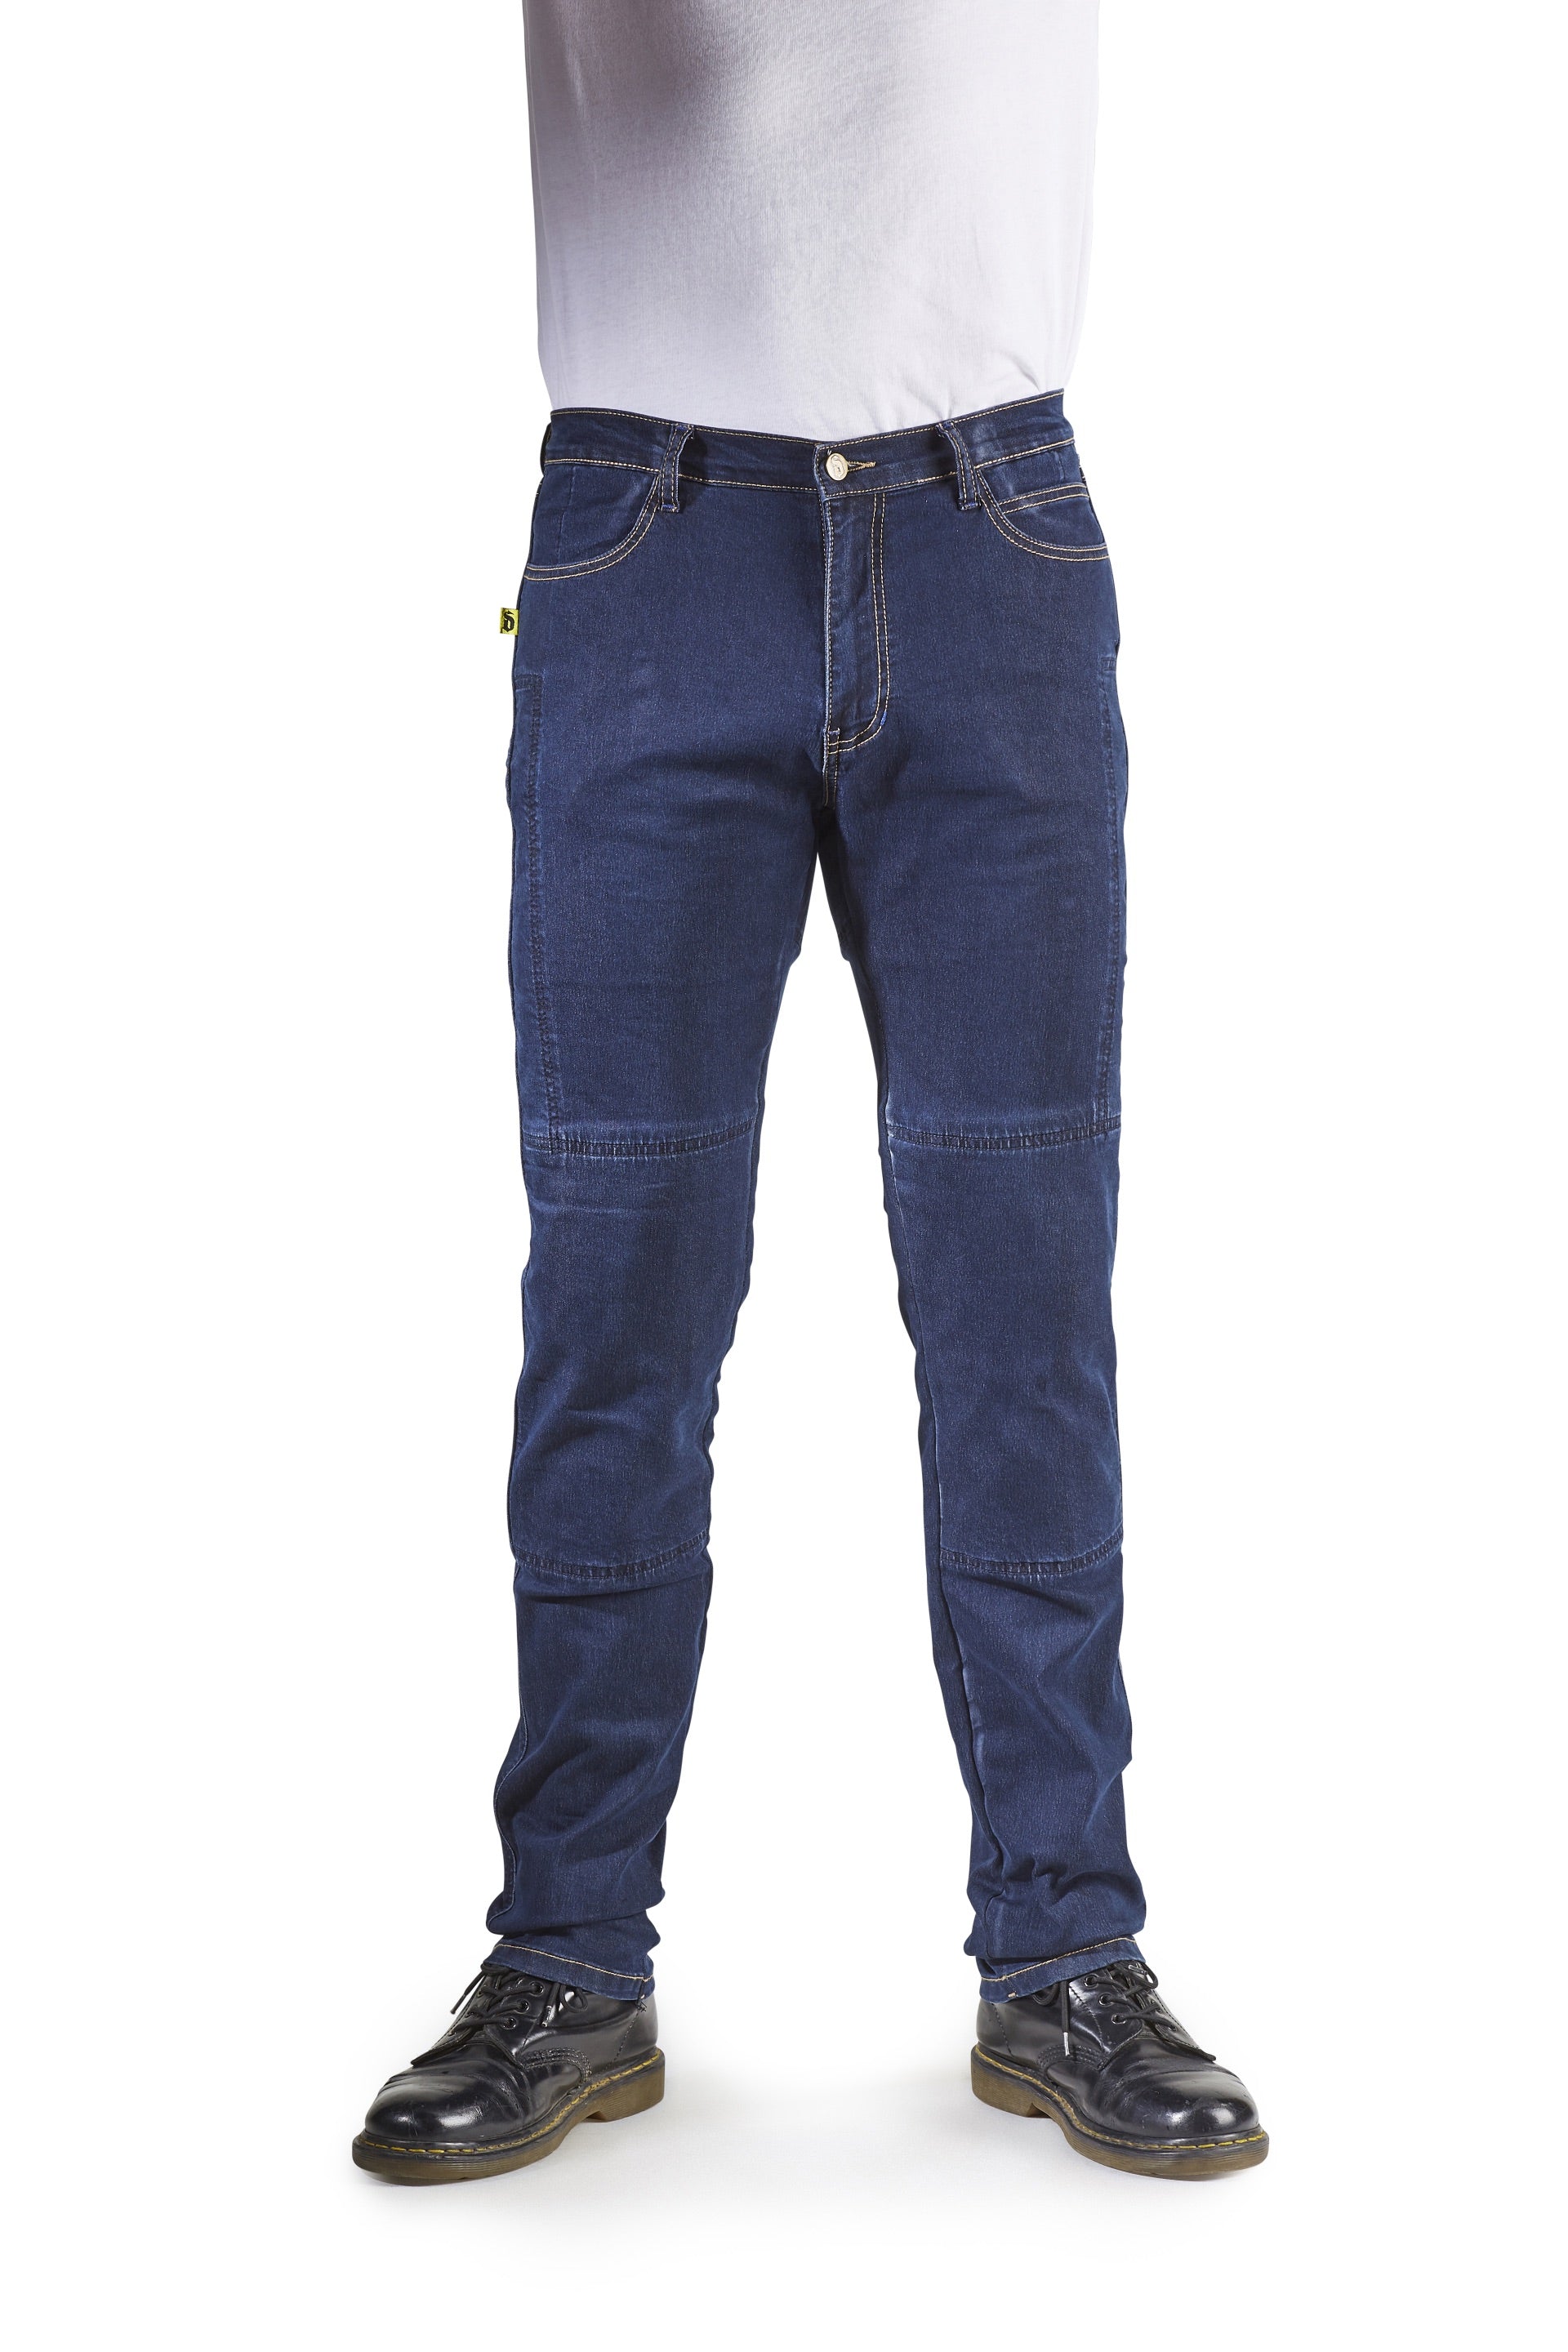 Jeans, Superleggera by Draggin Jeans